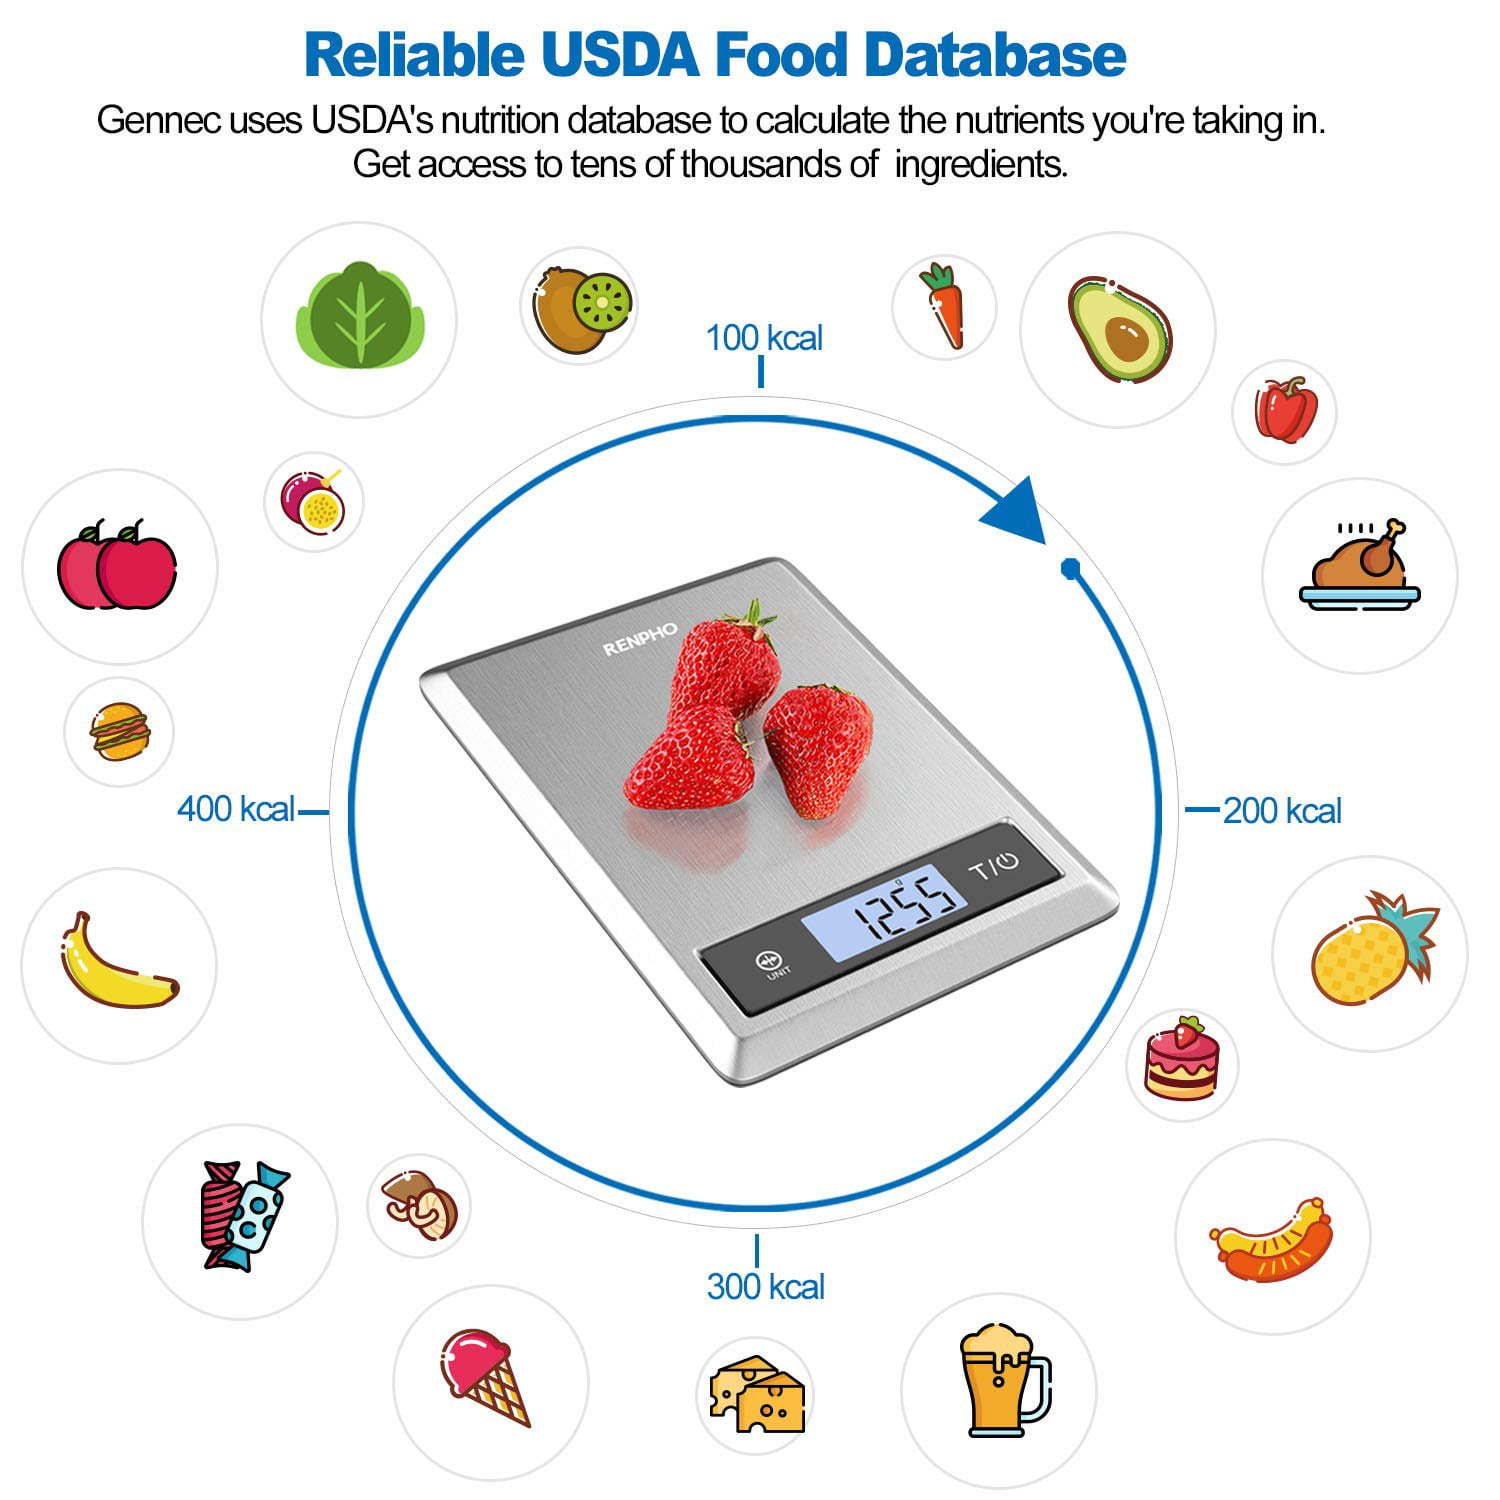 Smart Food Scale 2 – RENPHO US